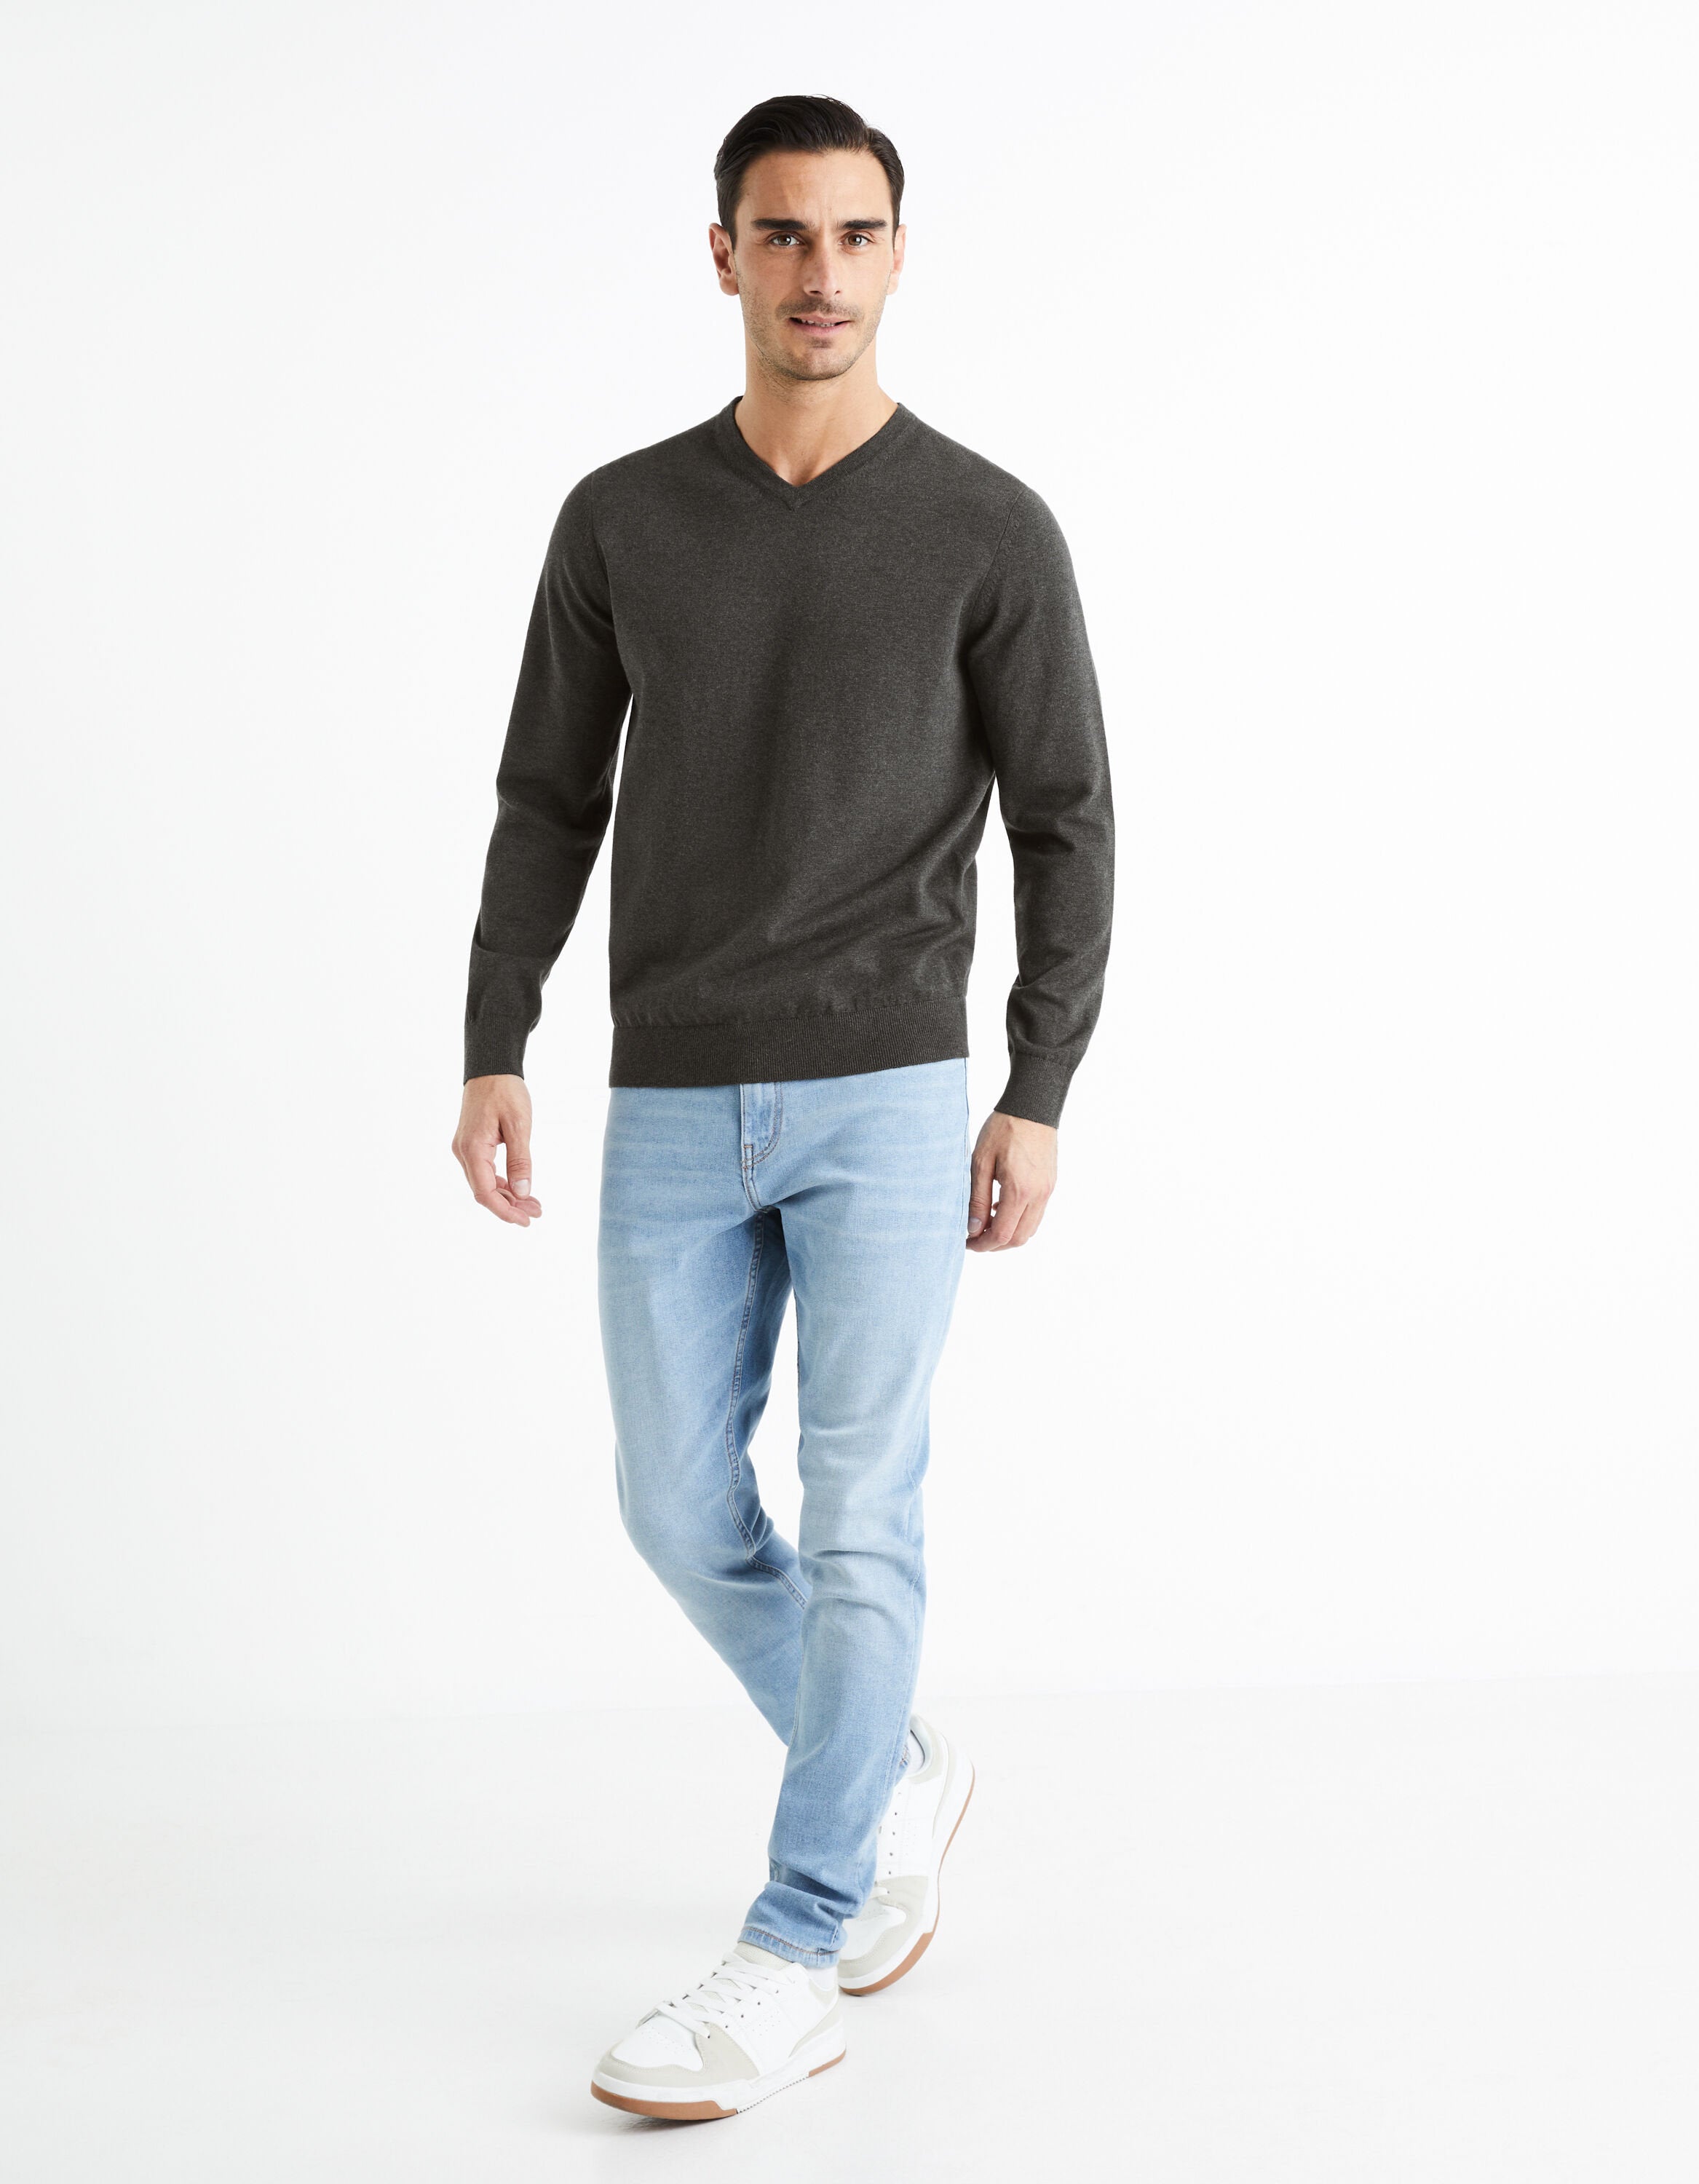 V-Neck Sweater 100% Cotton - Anthracite_DECOTONV_ANTHRA MEL_03